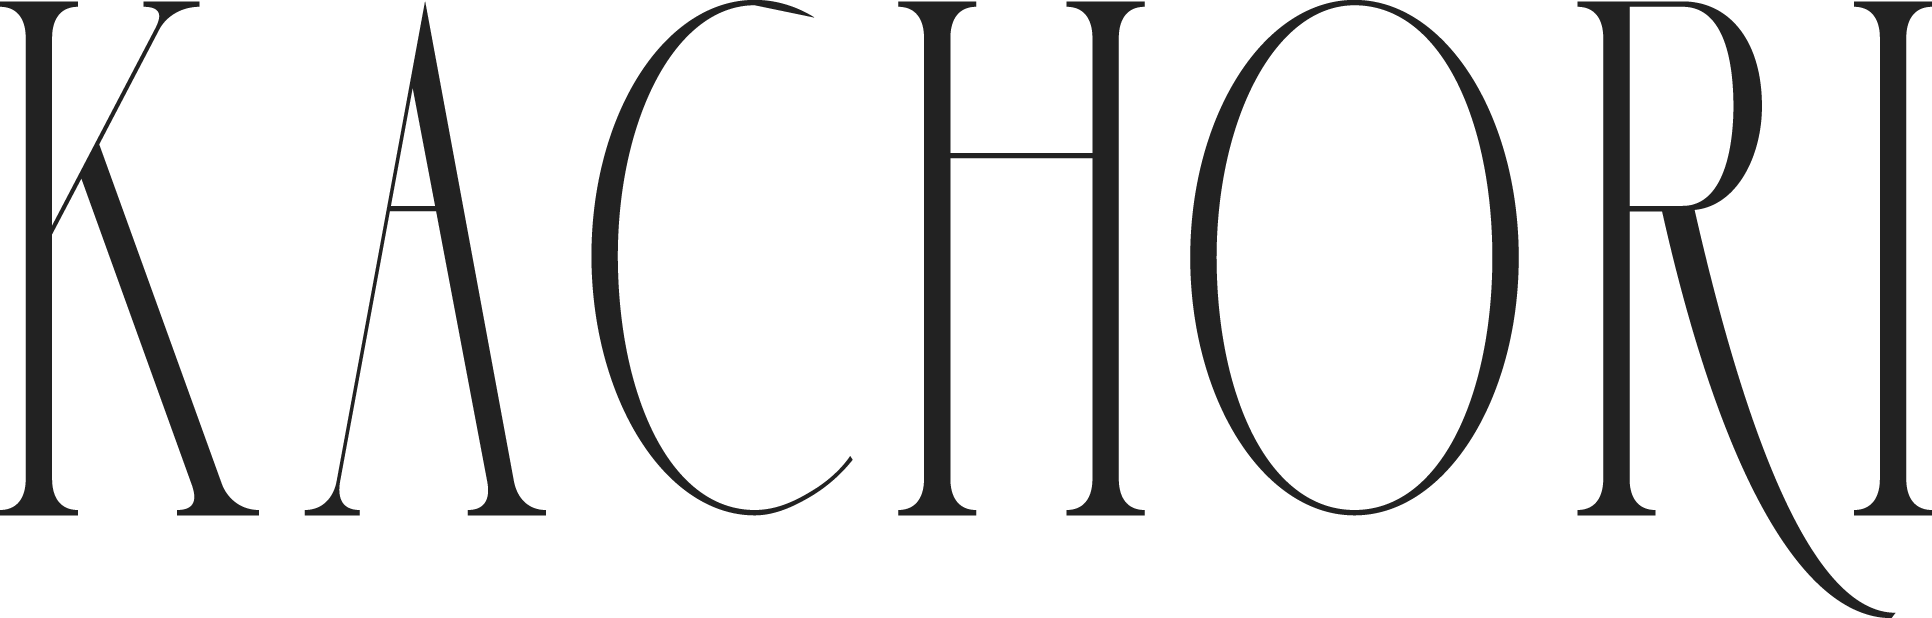 Kachori logo